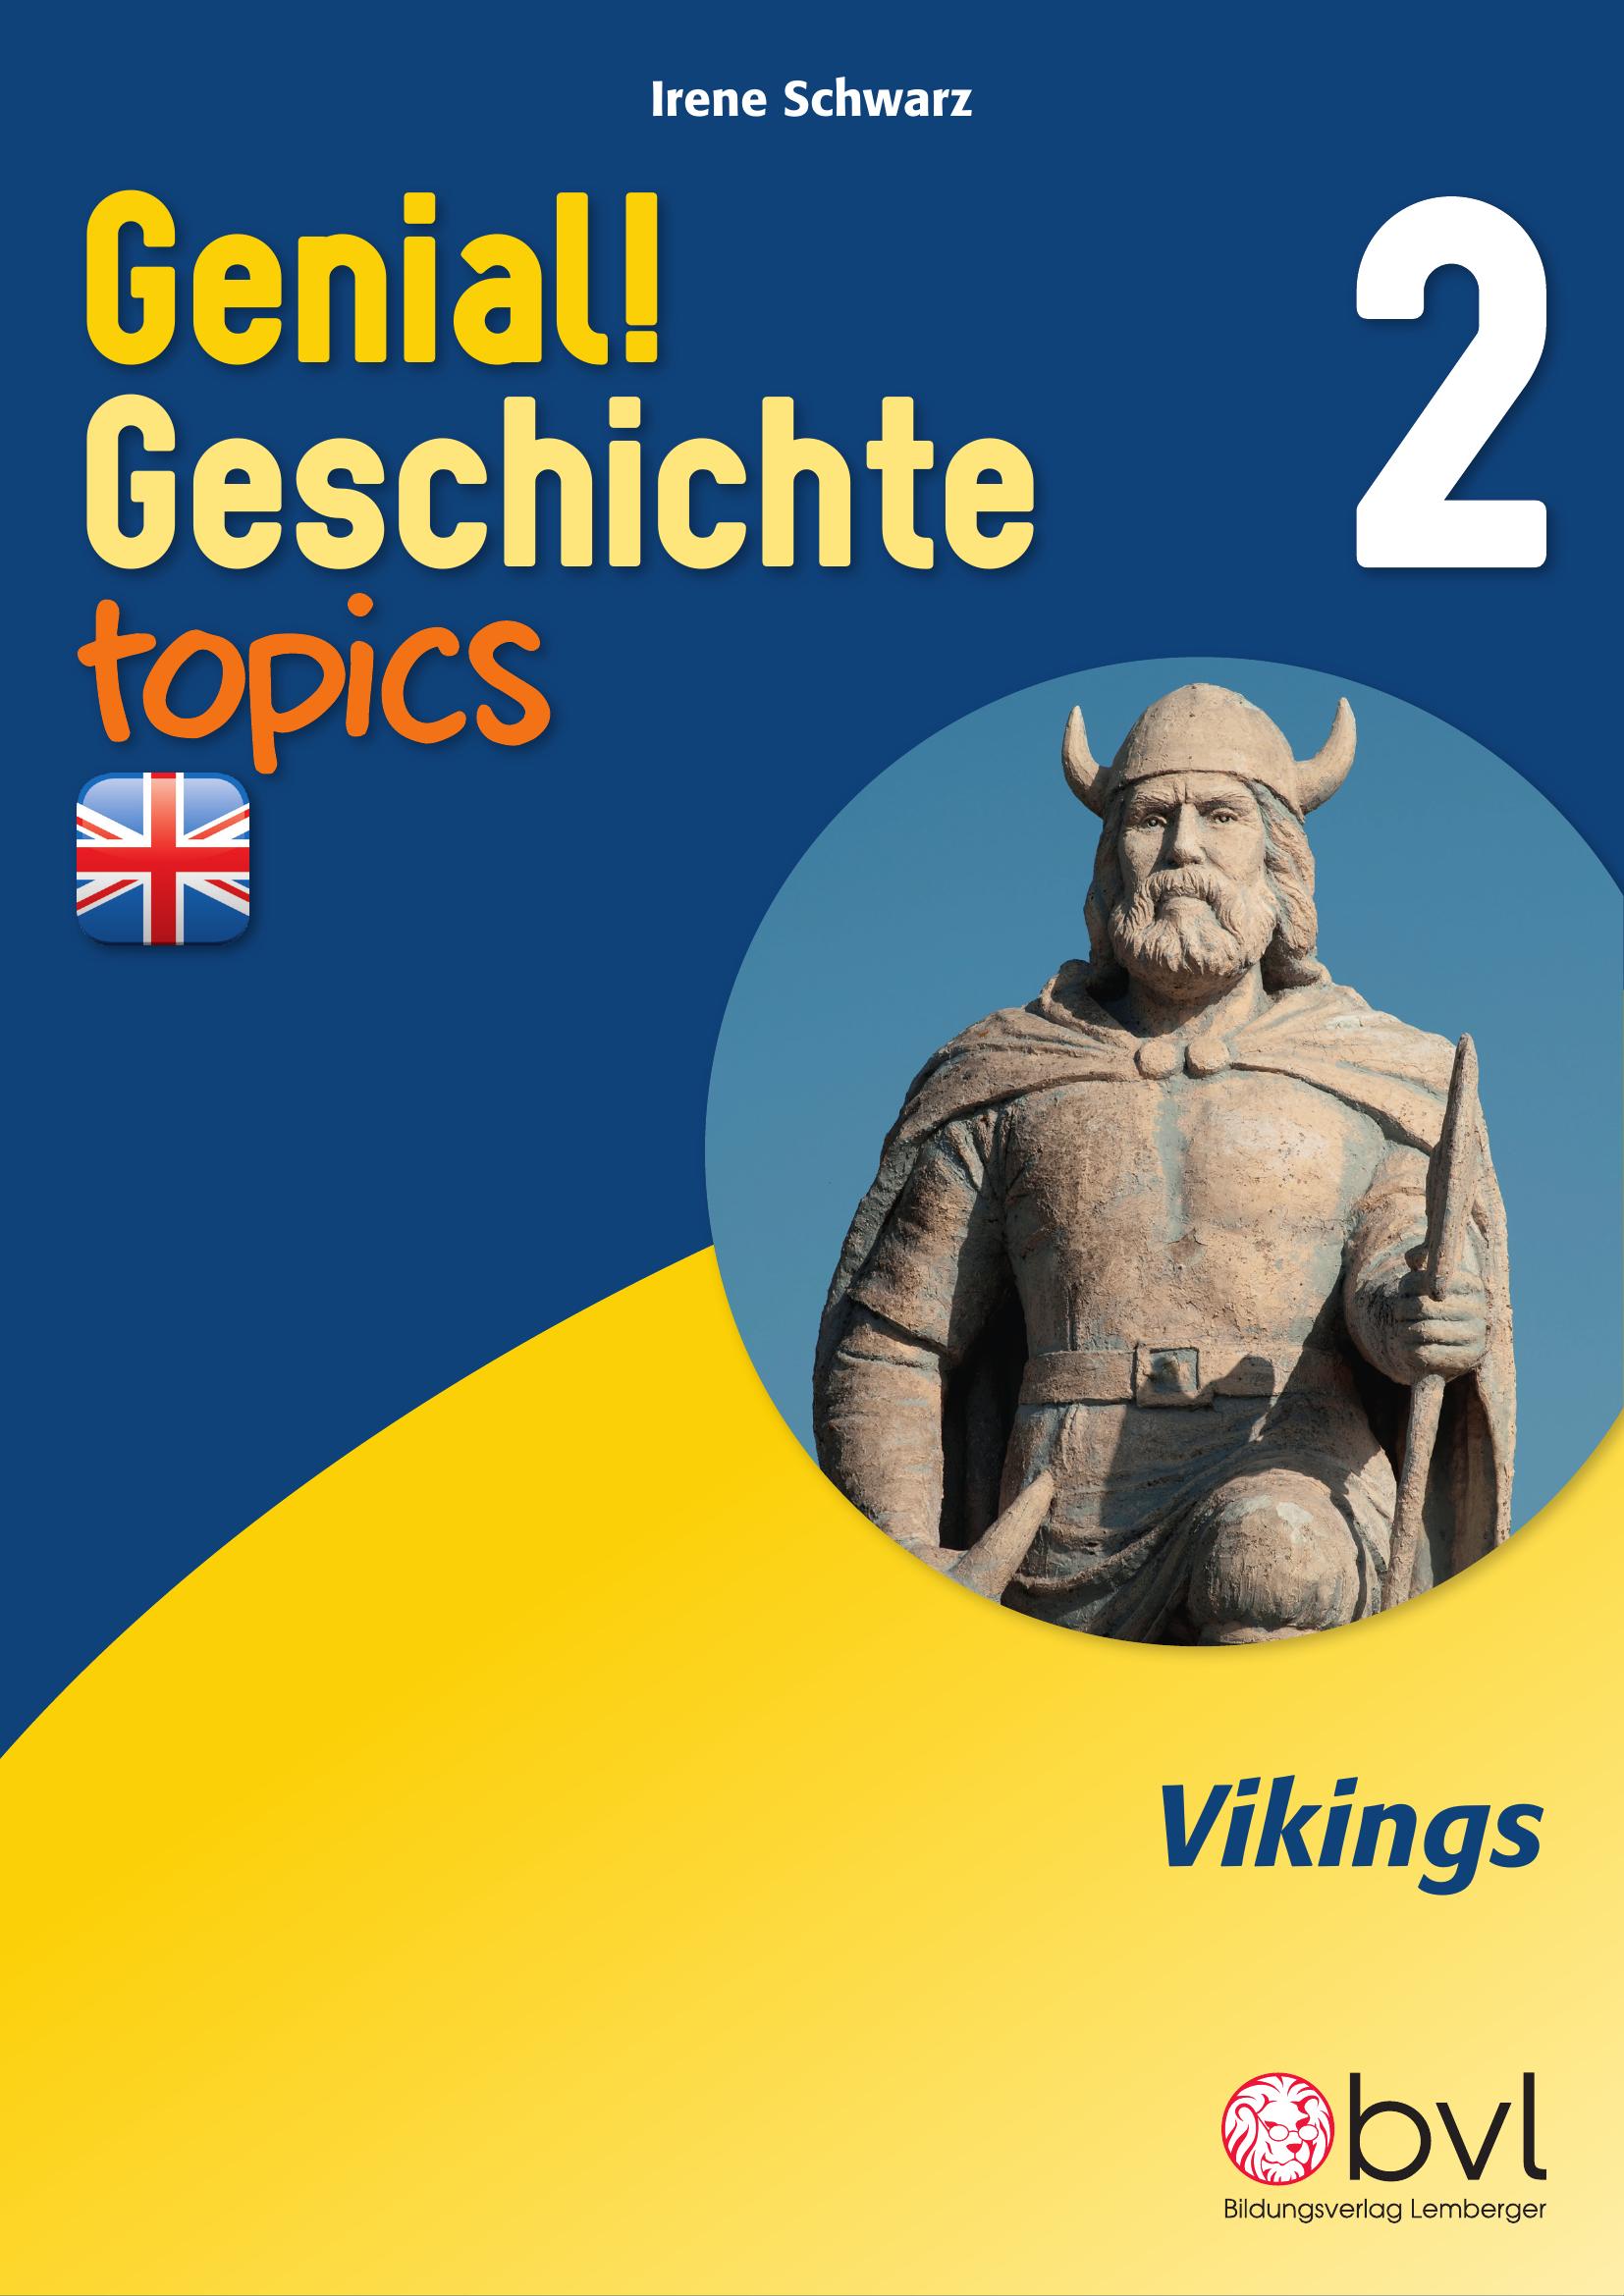 Genial! Geschichte 2 – topics 6: Vikings